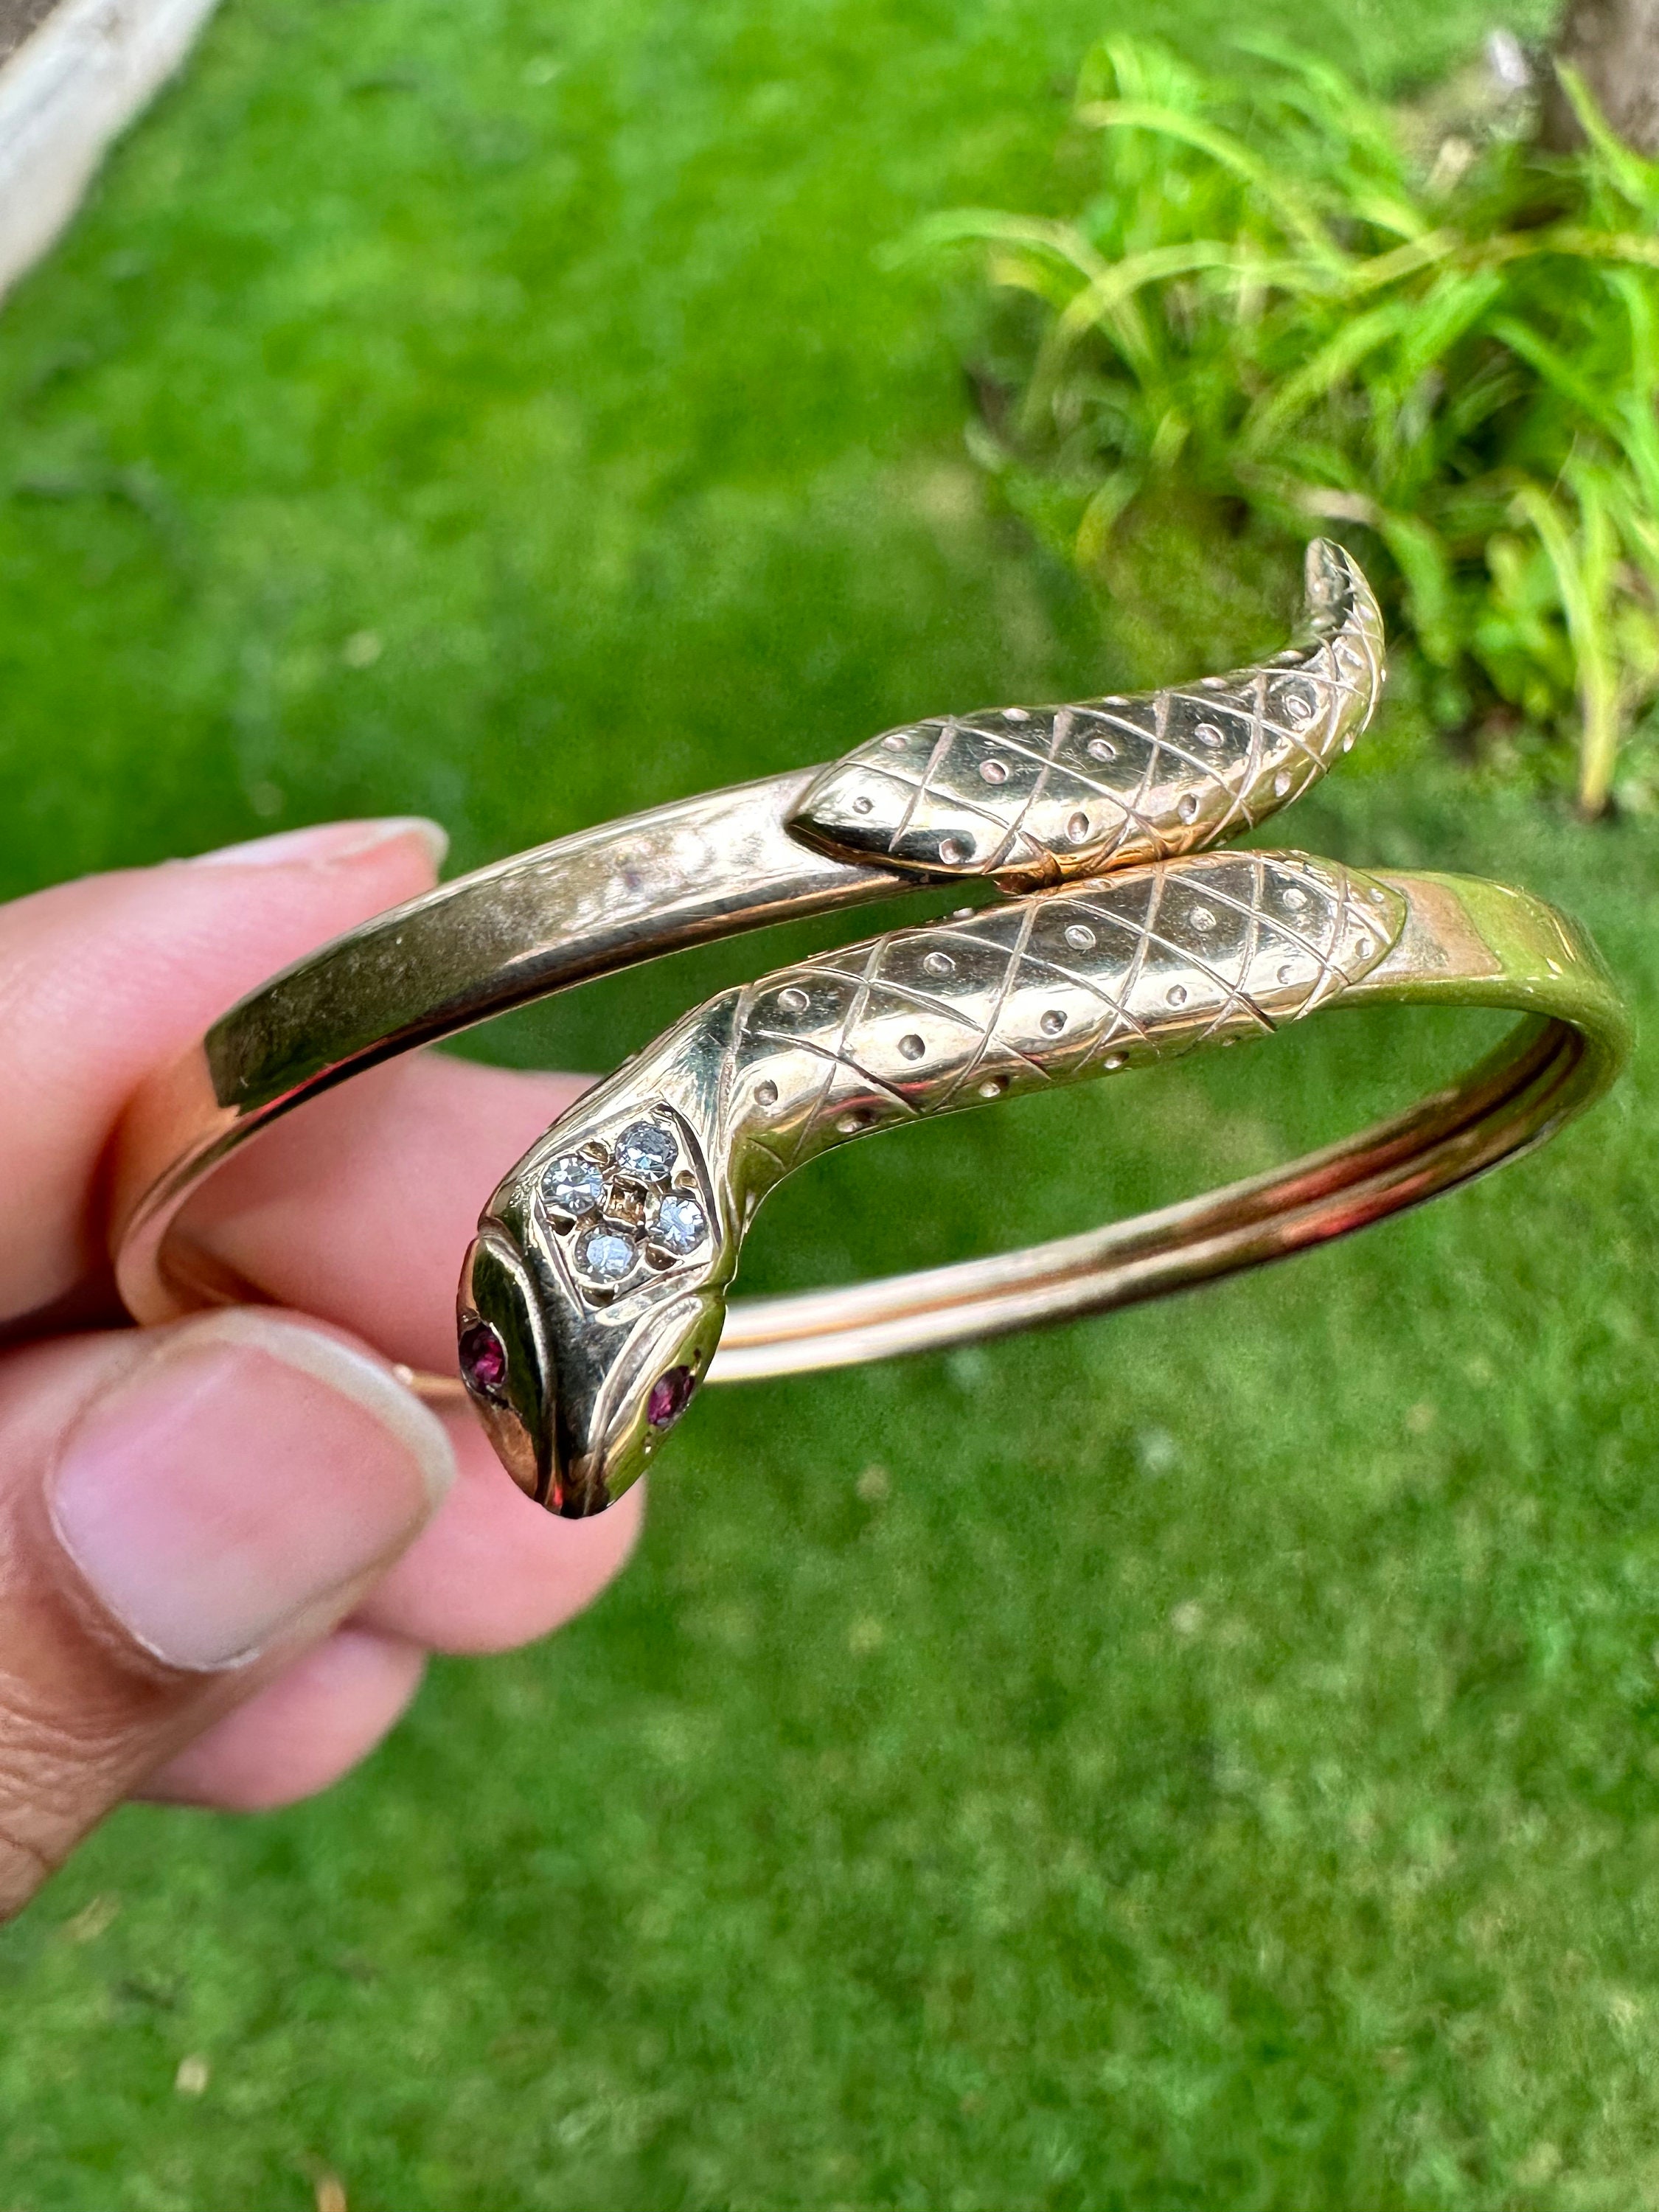 Snake Bracelet With Emerald Eyes Silver or Black Serpent Bracelet Snake  Cuff Bracelet Viper Serpent Jewelry Bangle Gift for Her 